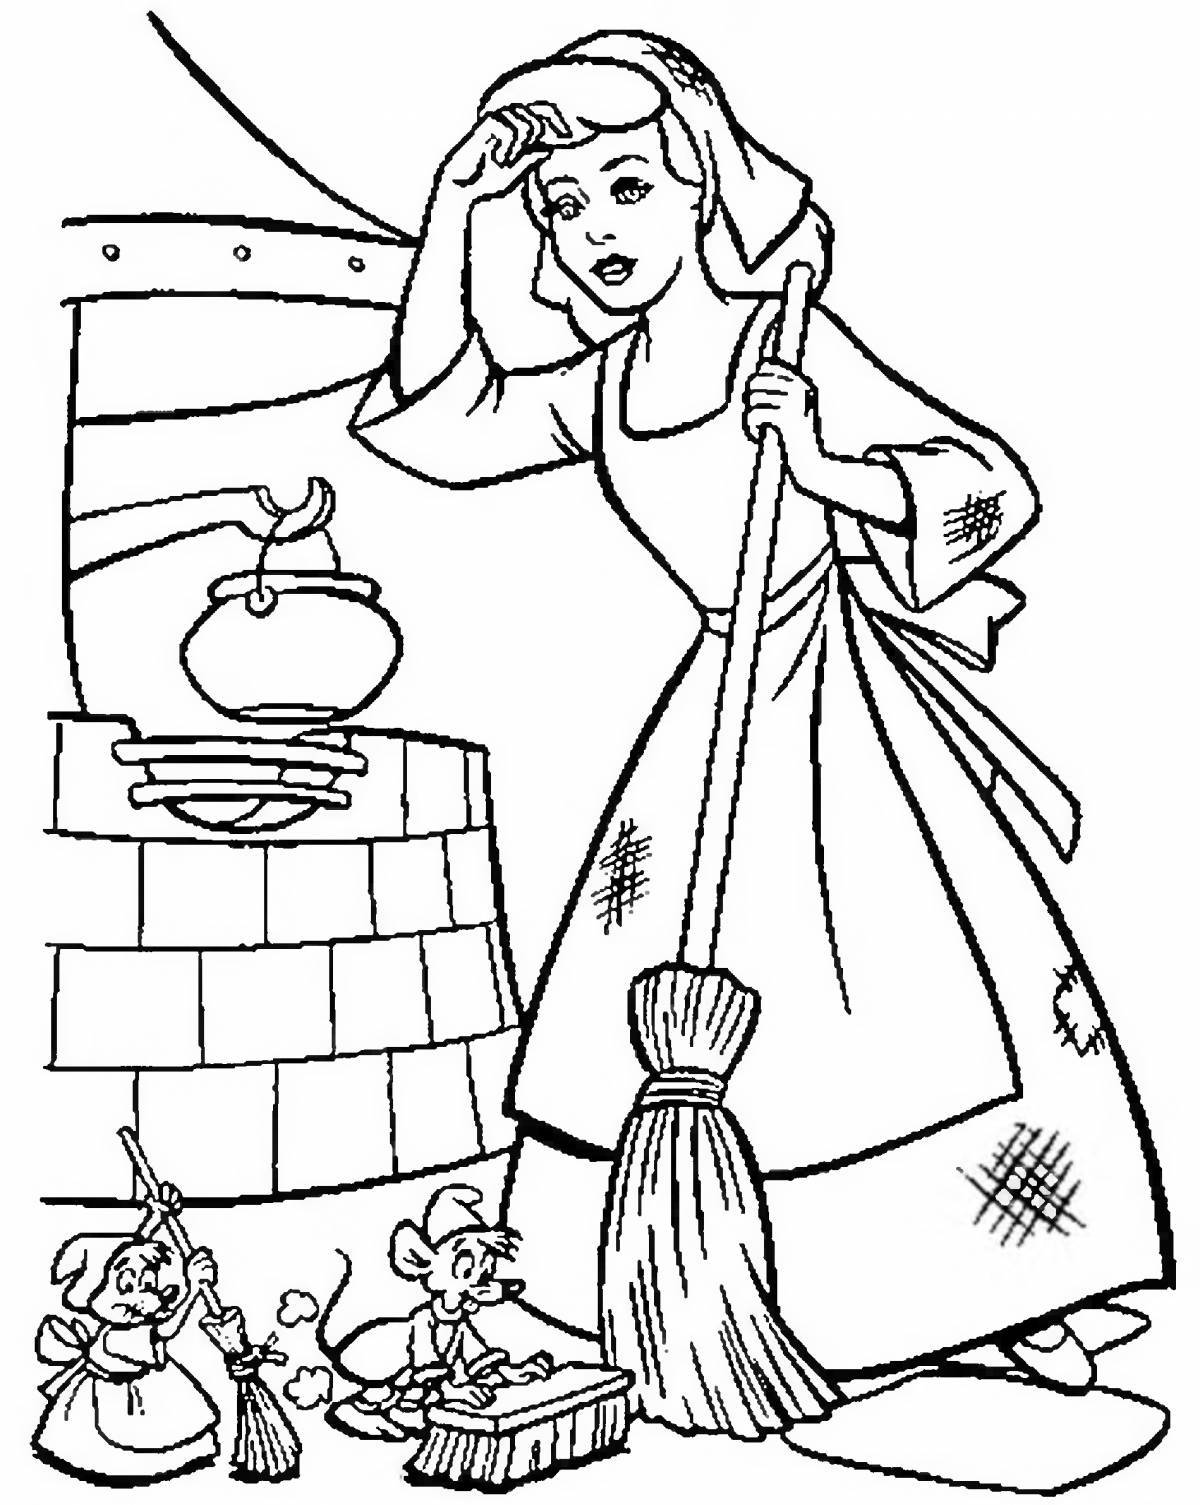 A fun Cinderella coloring book for kids